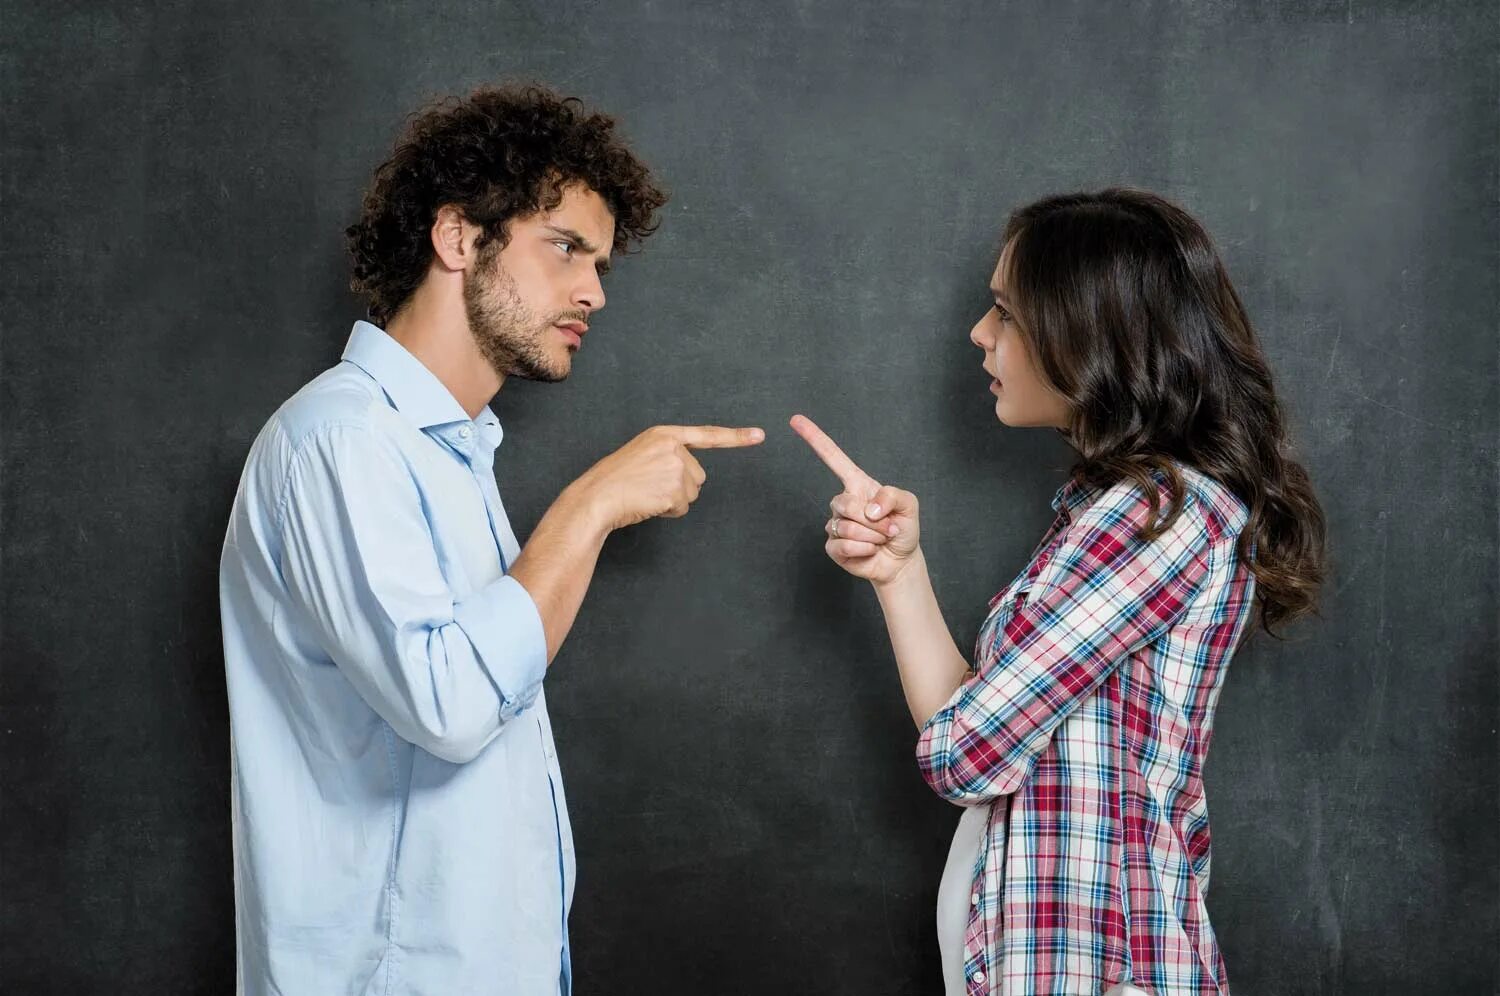 В трудной психологической ситуации. Конфликт. Люди спорят. Мужчина и женщина спорят. Спор между мужчиной и женщиной.